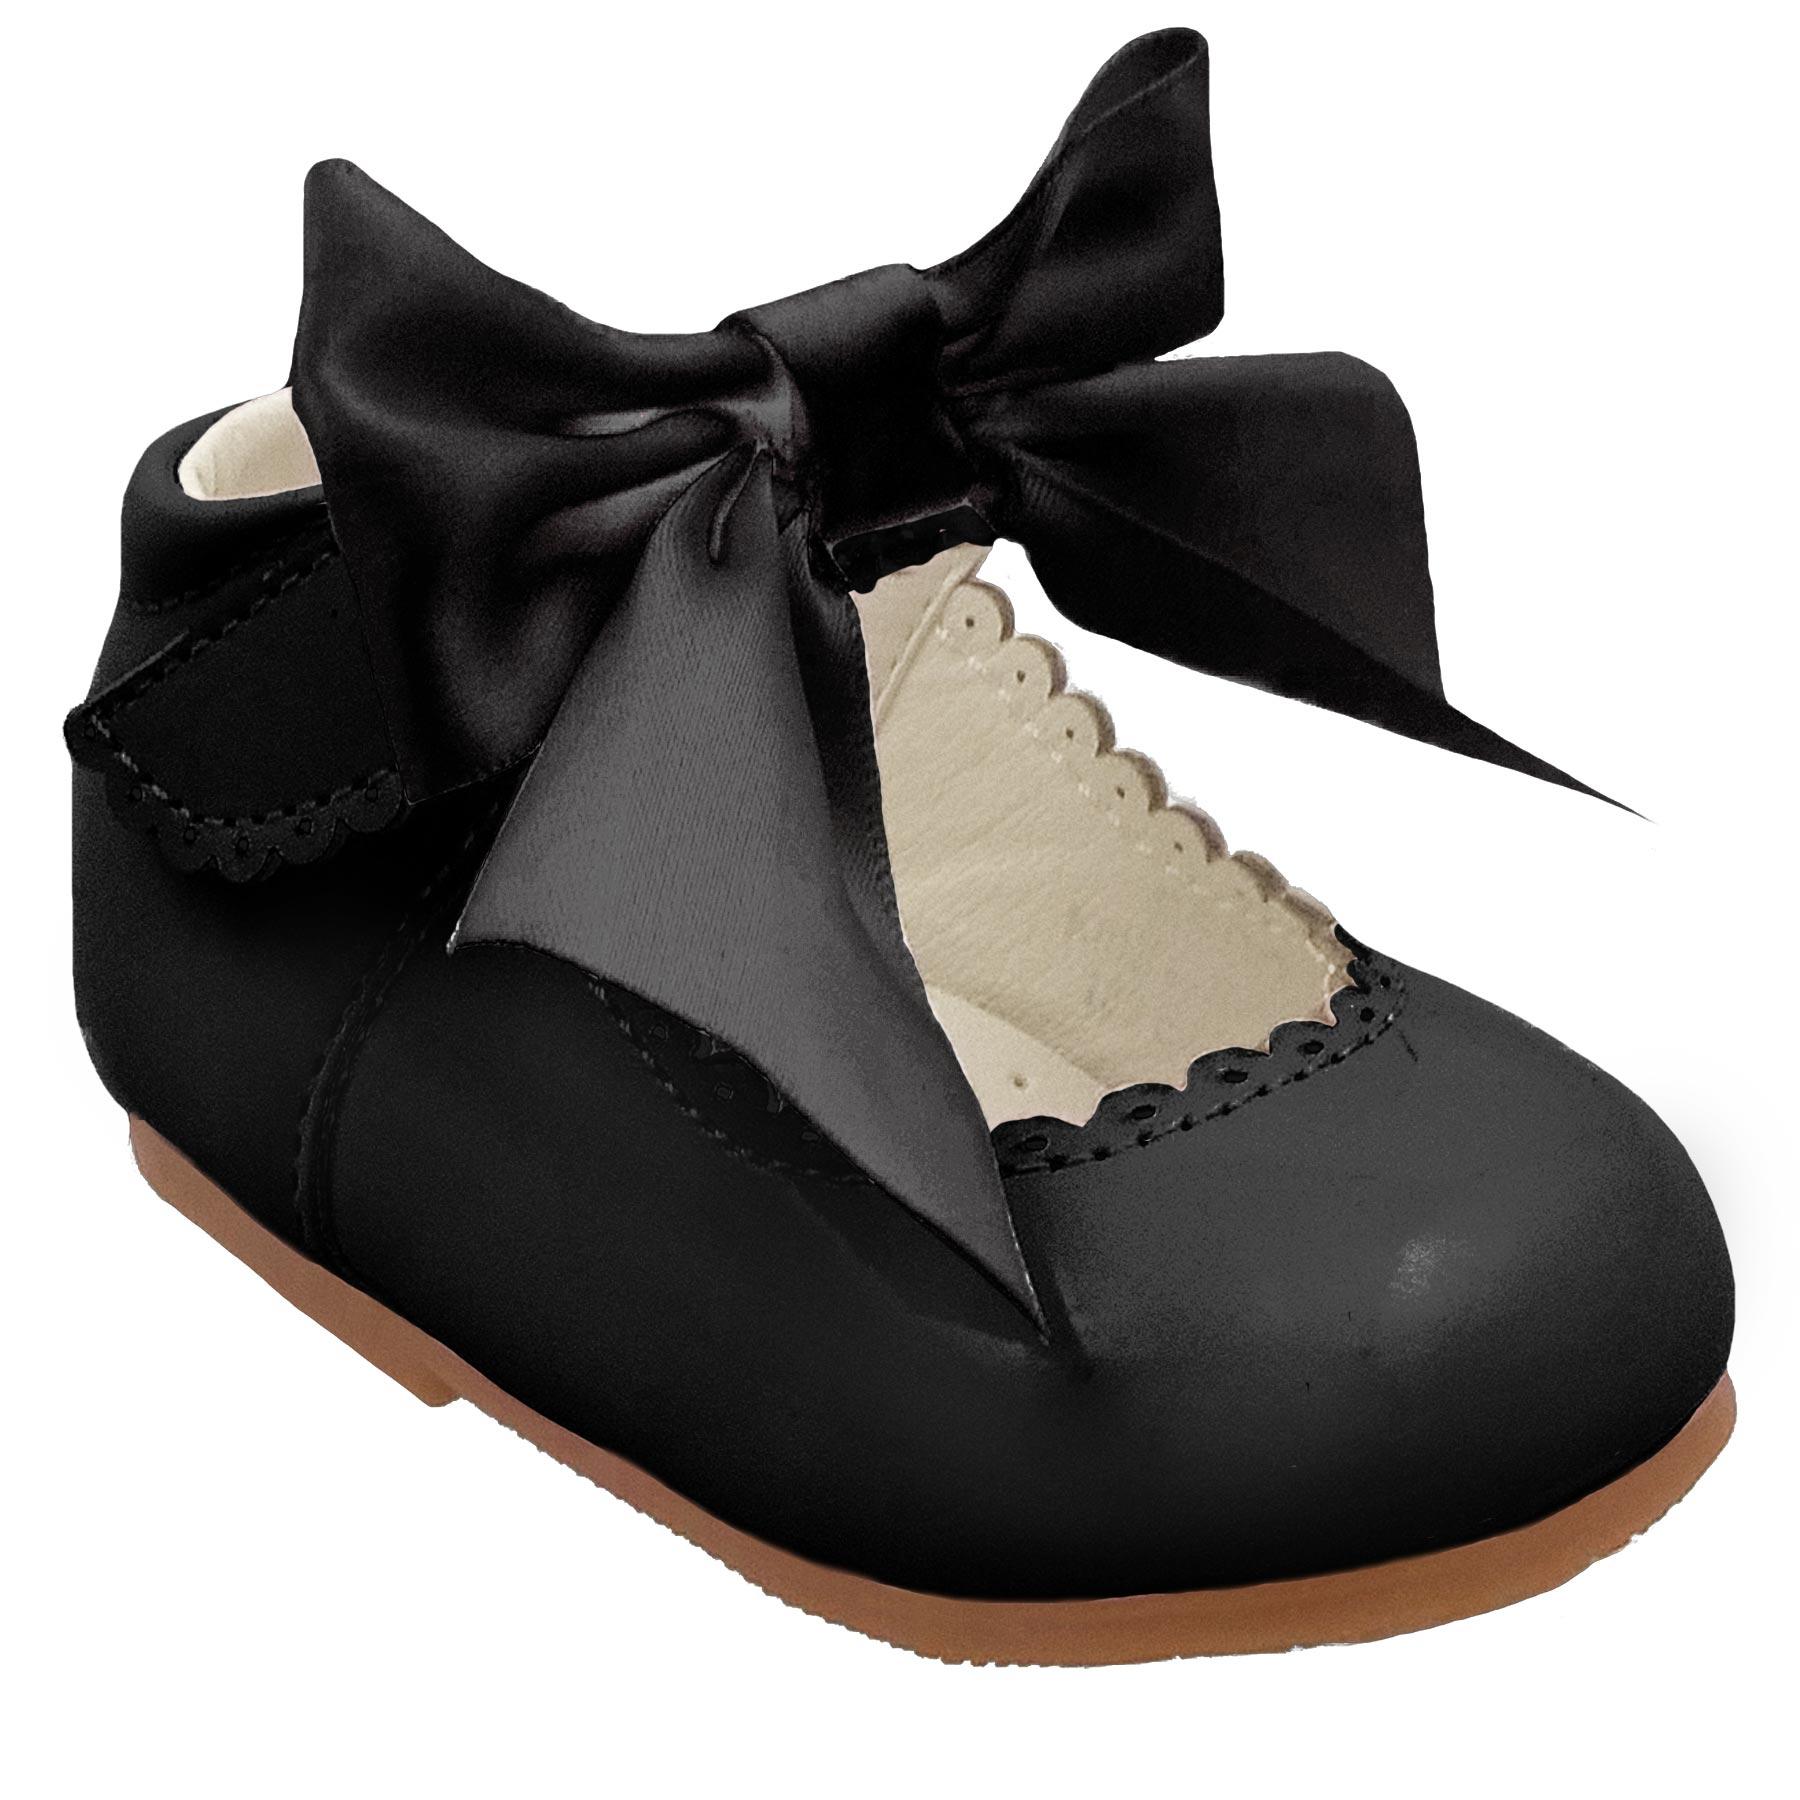 Tia London 8500 Black Bow Shoes